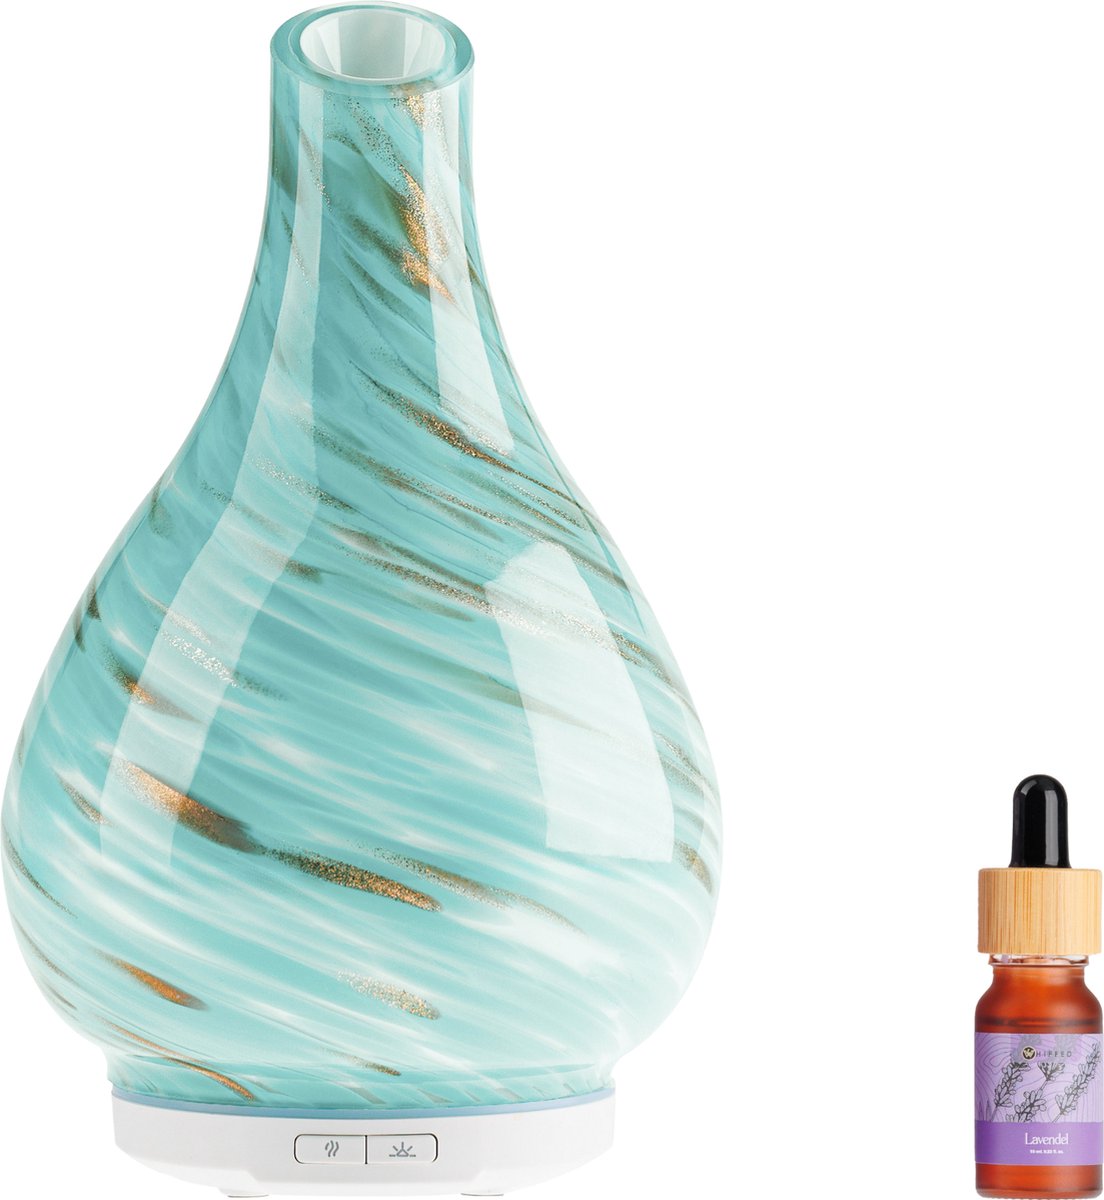 Whiffed® Luxe Aroma Diffuser Incl. Etherische olie - Lavendel - Geurverspreider met Glazen Design - 8 uur Aromatherapie - Tot 80m2 - Essentiële Olie Vernevelaar & Diffuser